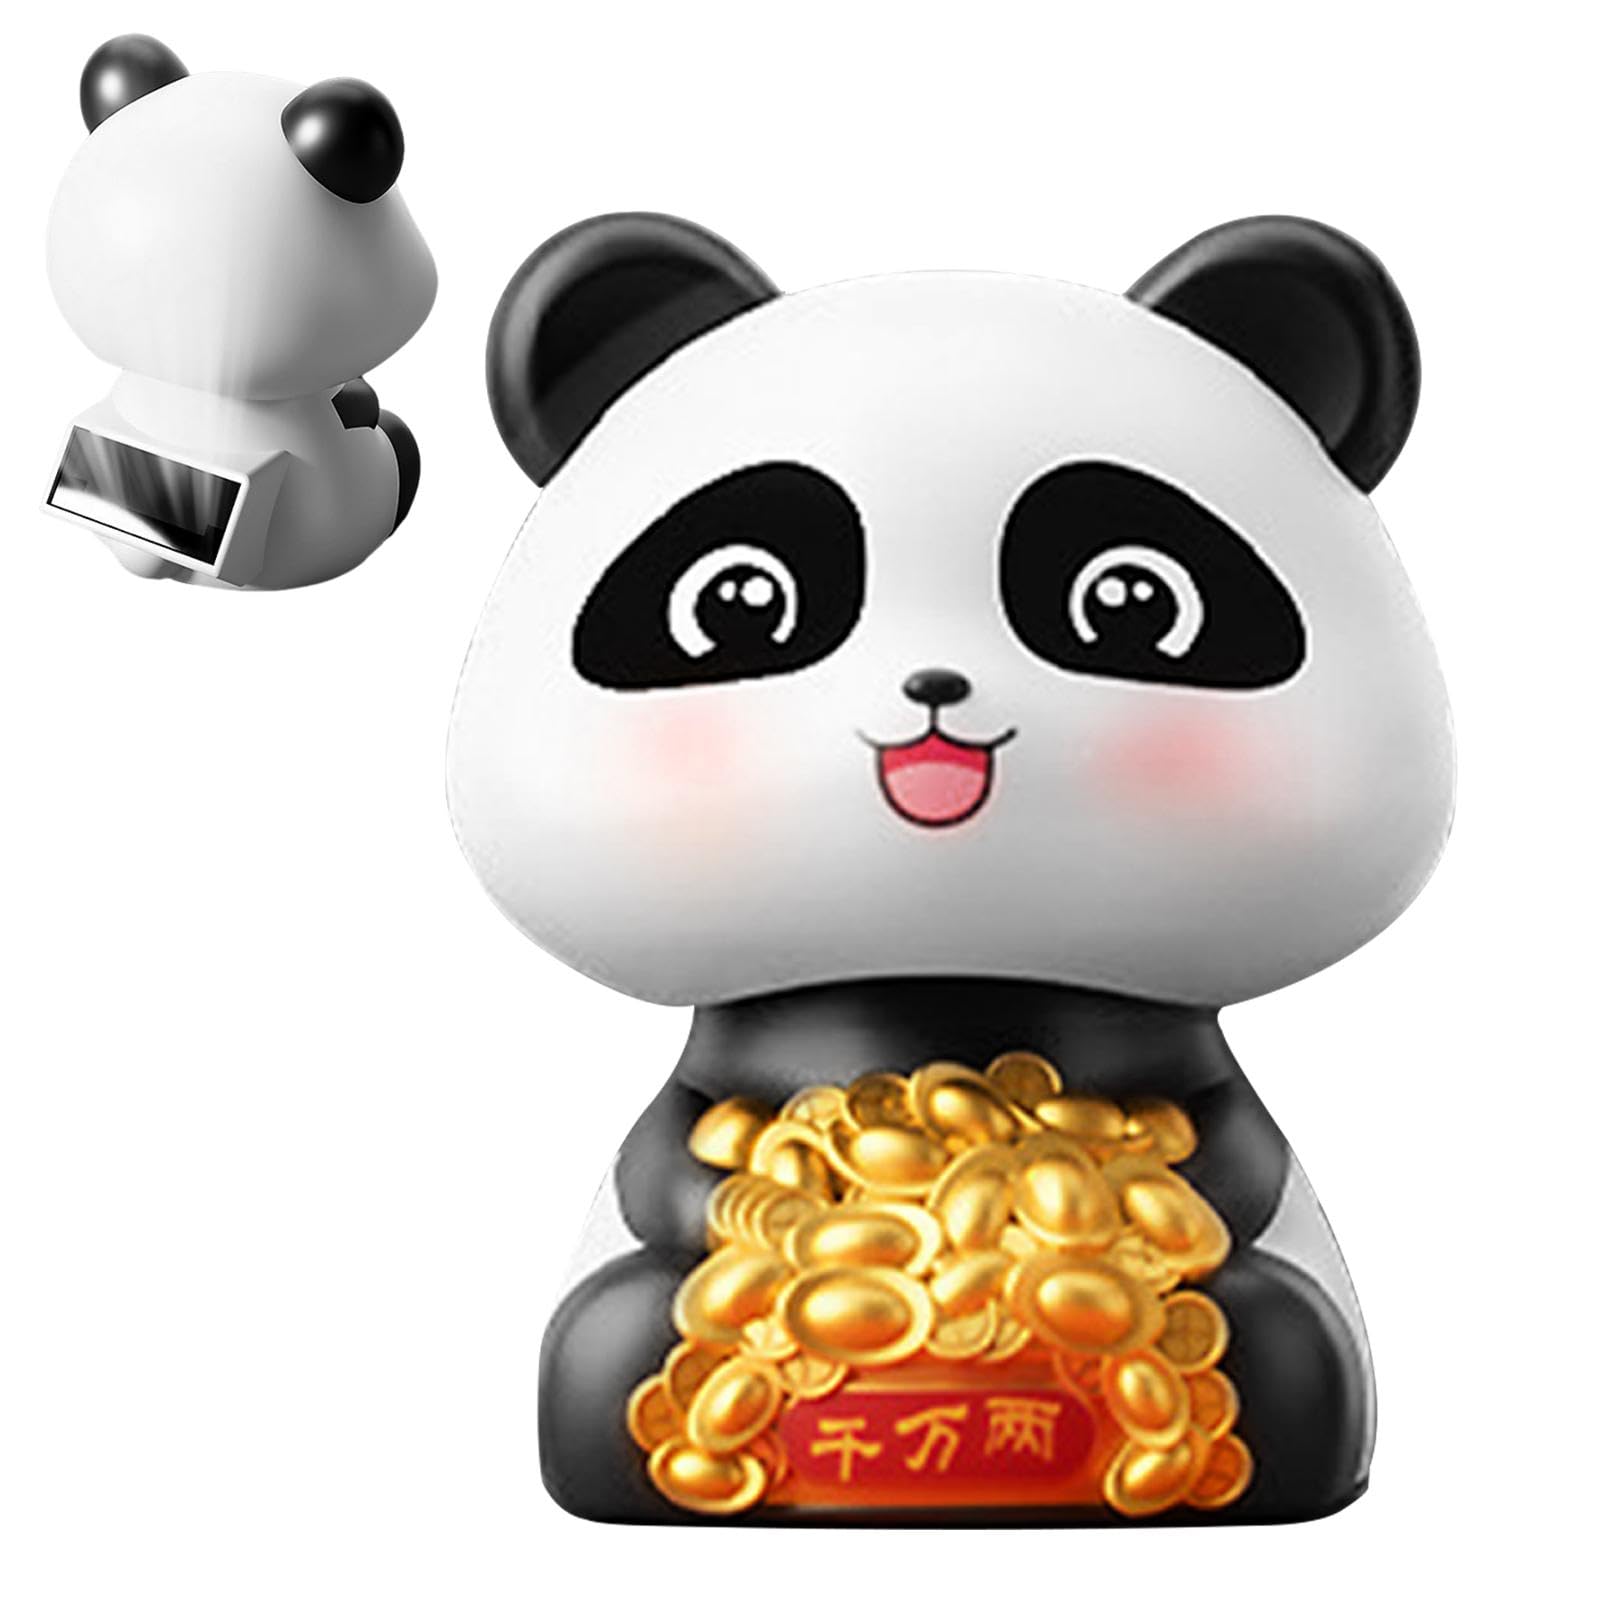 Armaturenbrett-Panda-Figur, Panda-Armaturenbrett-Dekorationen,Panda-Statue für Armaturenbrett - Schöner Panda-Auto-Armaturenbrett-Dekor, solarbetriebener schüttelnder Kopf-Panda für den Desktop von Generic